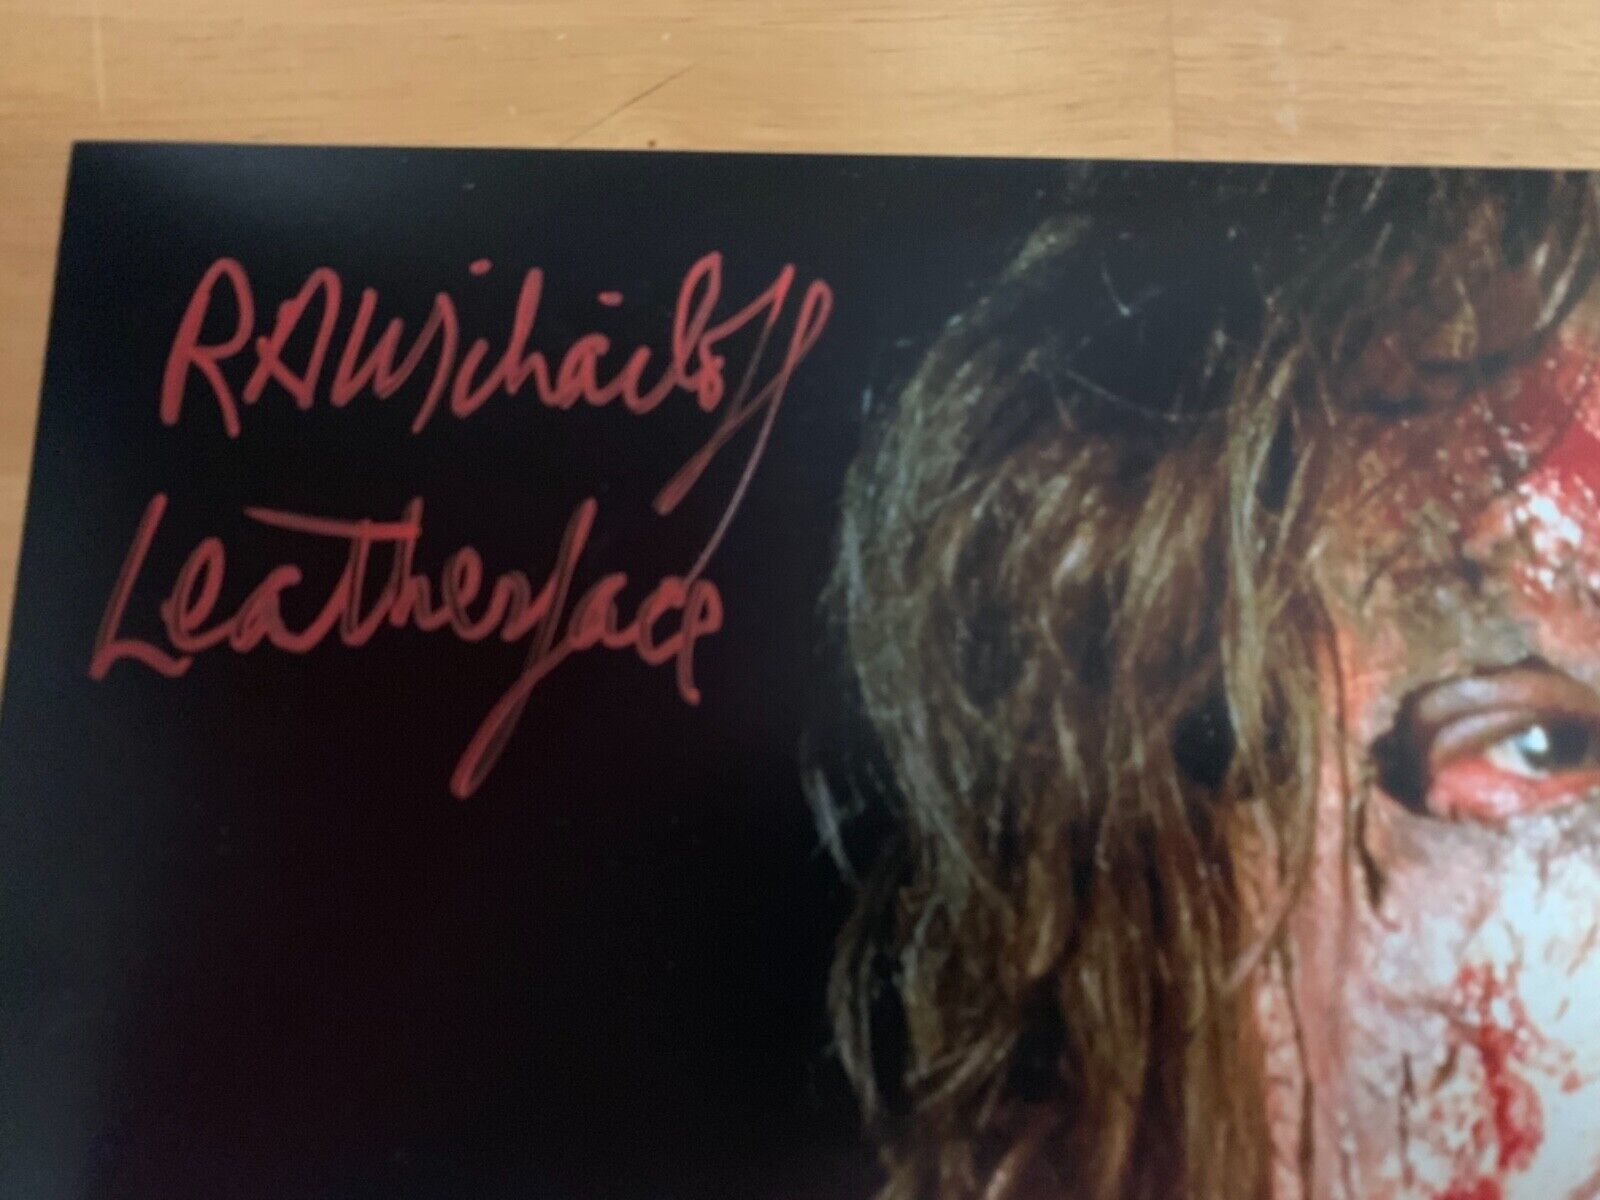 RA Mihailoff “Leatherface” Autographed 11x14 Photo JSA Authentication